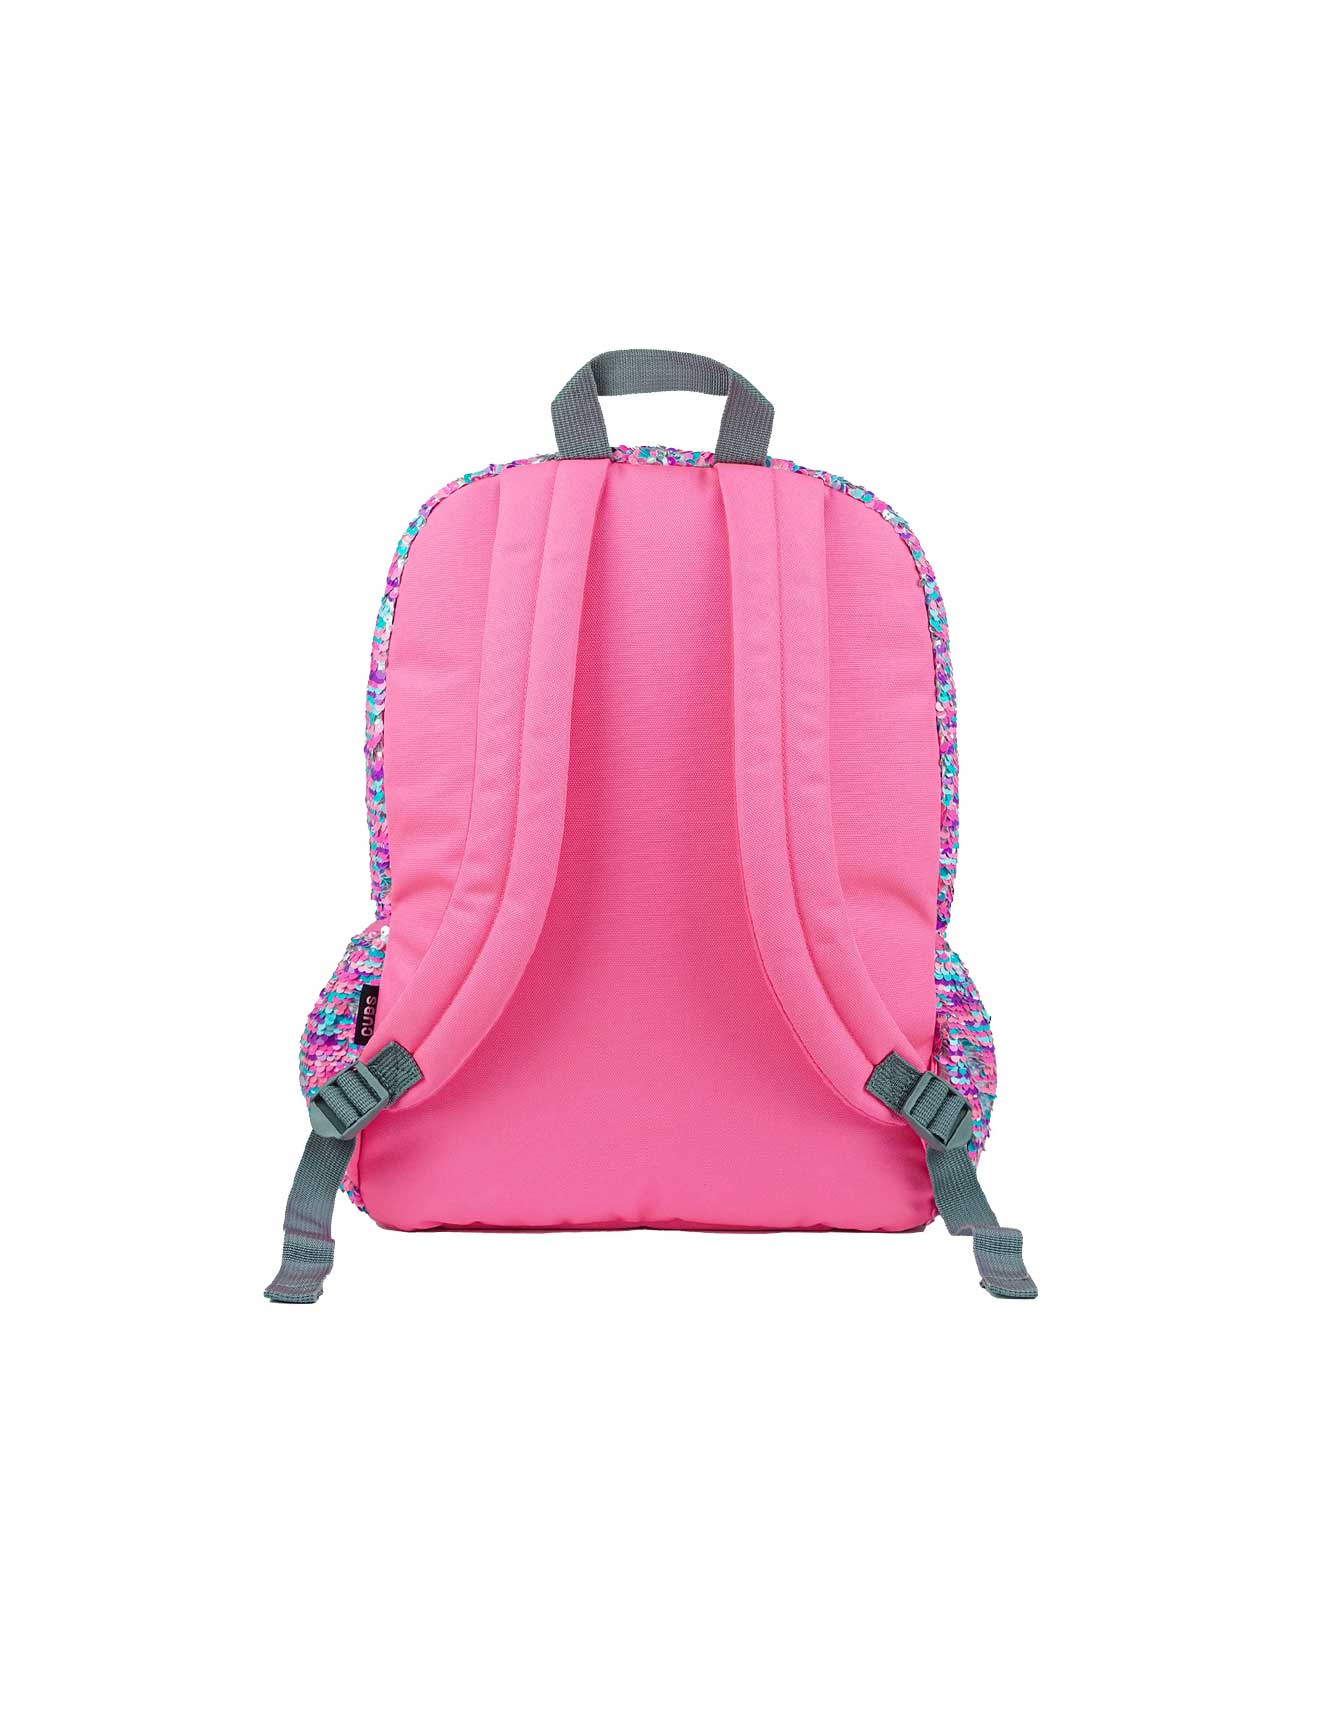 Matt Multicolor Sequin Backpack | CUBS | Go Places